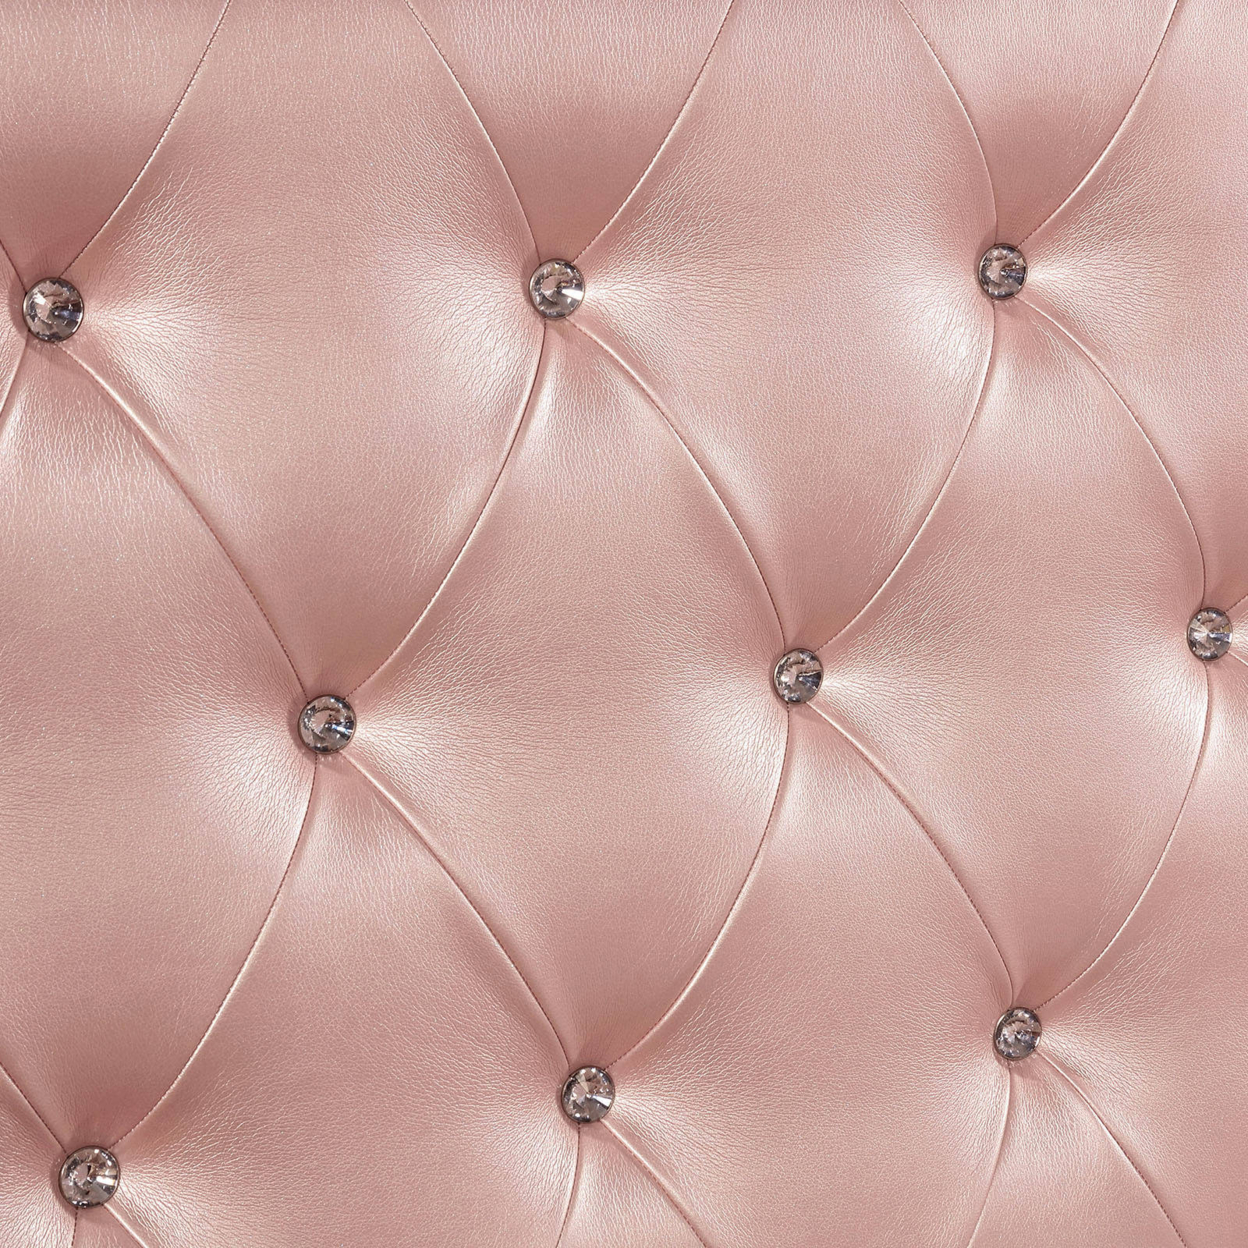 Contemporary Queen Size Wooden Bed With Mirror Trim Details, Pink- Saltoro Sherpi